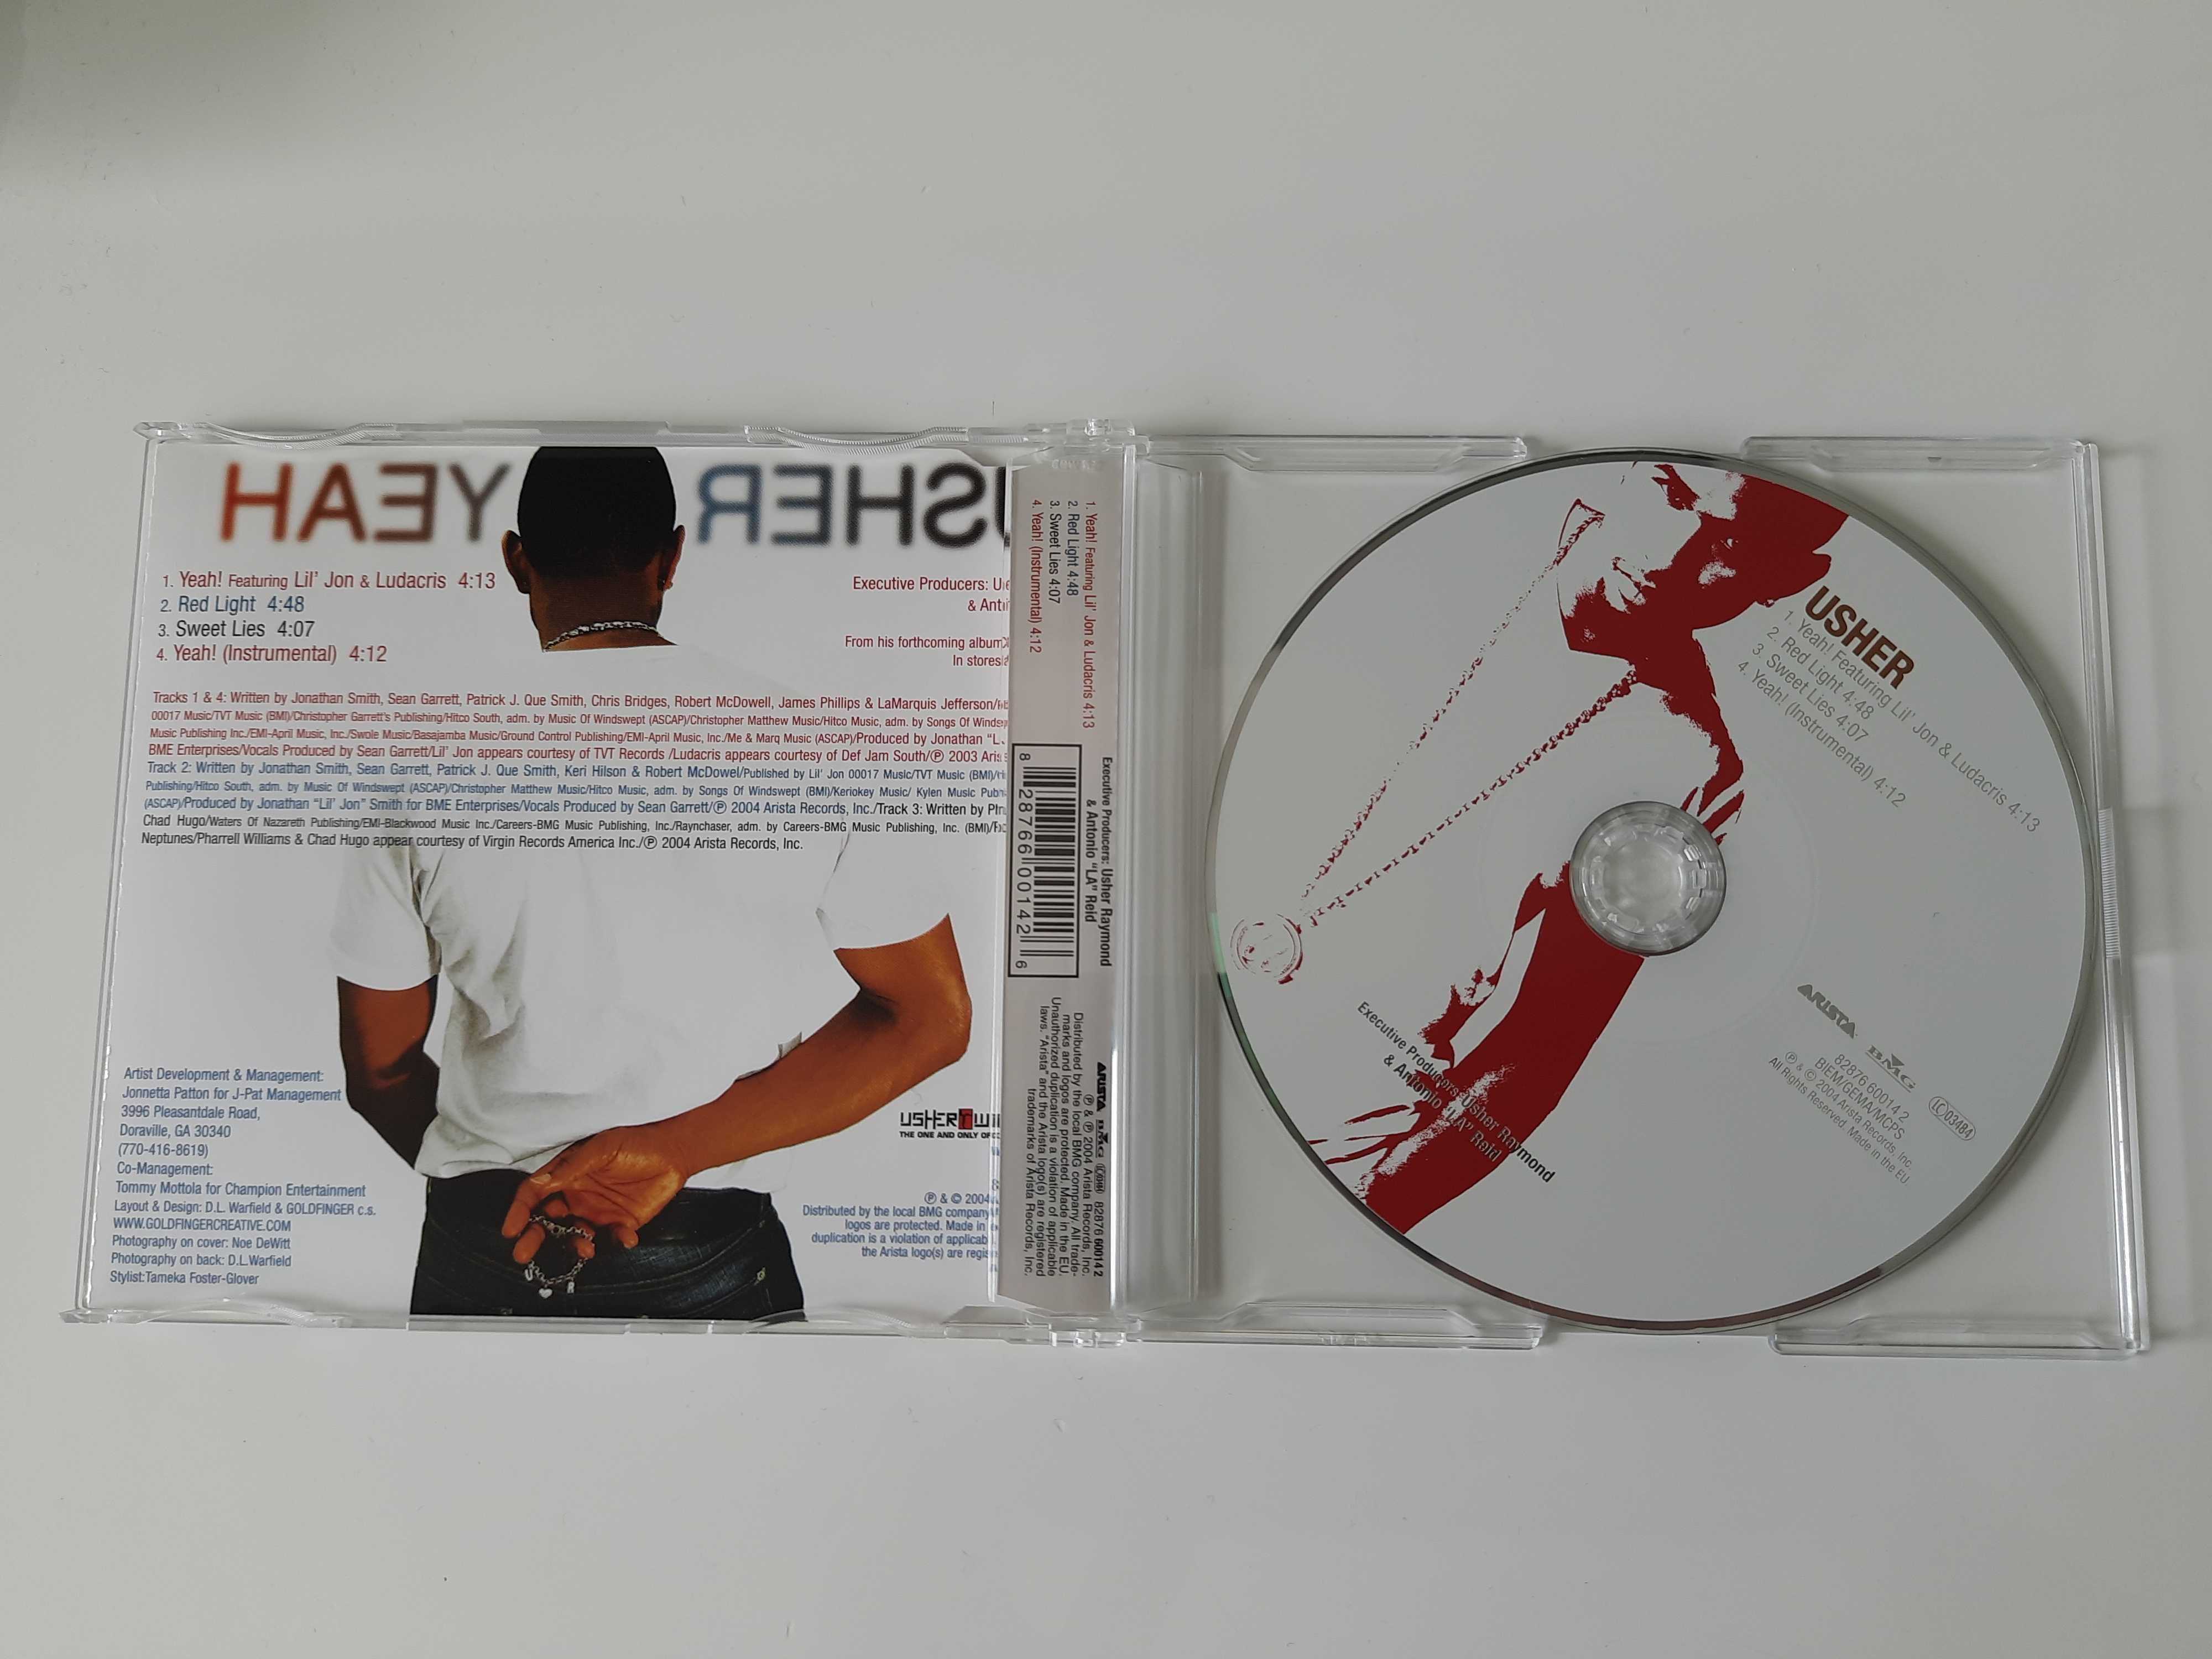 Usher - Yeah feat Lil' Jon & Ludacris 2004